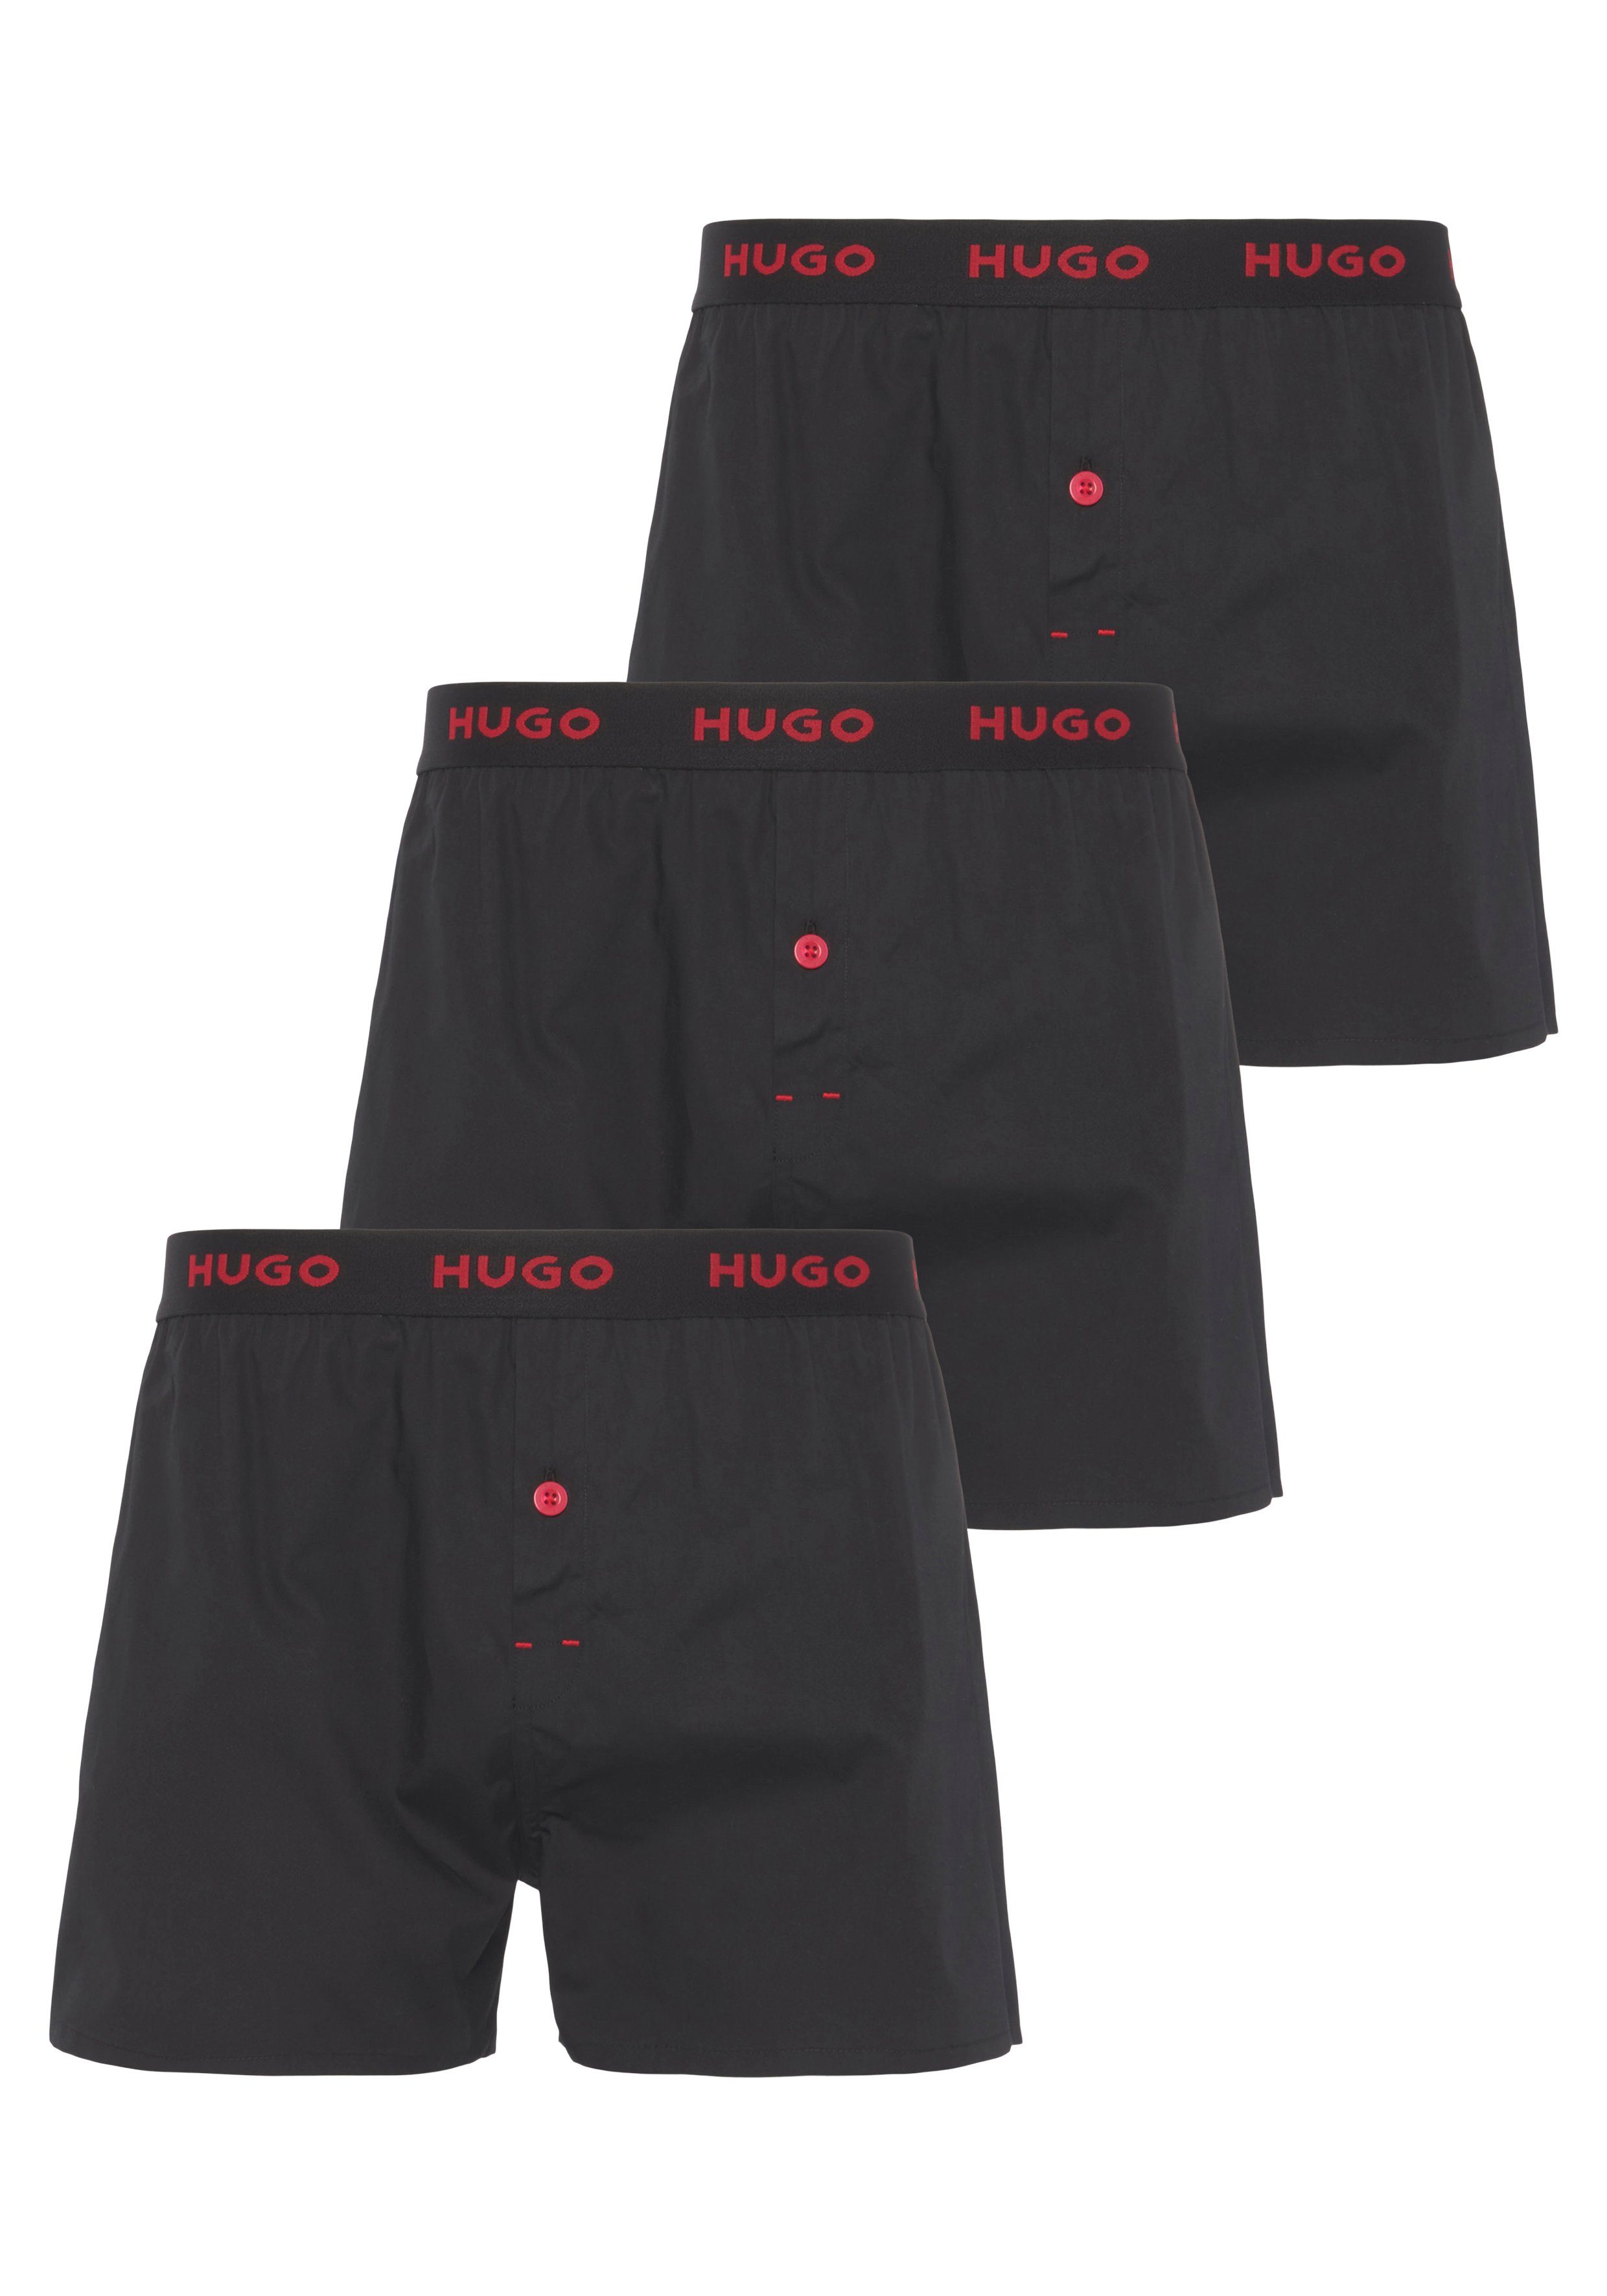 HUGO Boxershorts 3er) Black_002 TRIPLET WOVEN BOXER (Packung